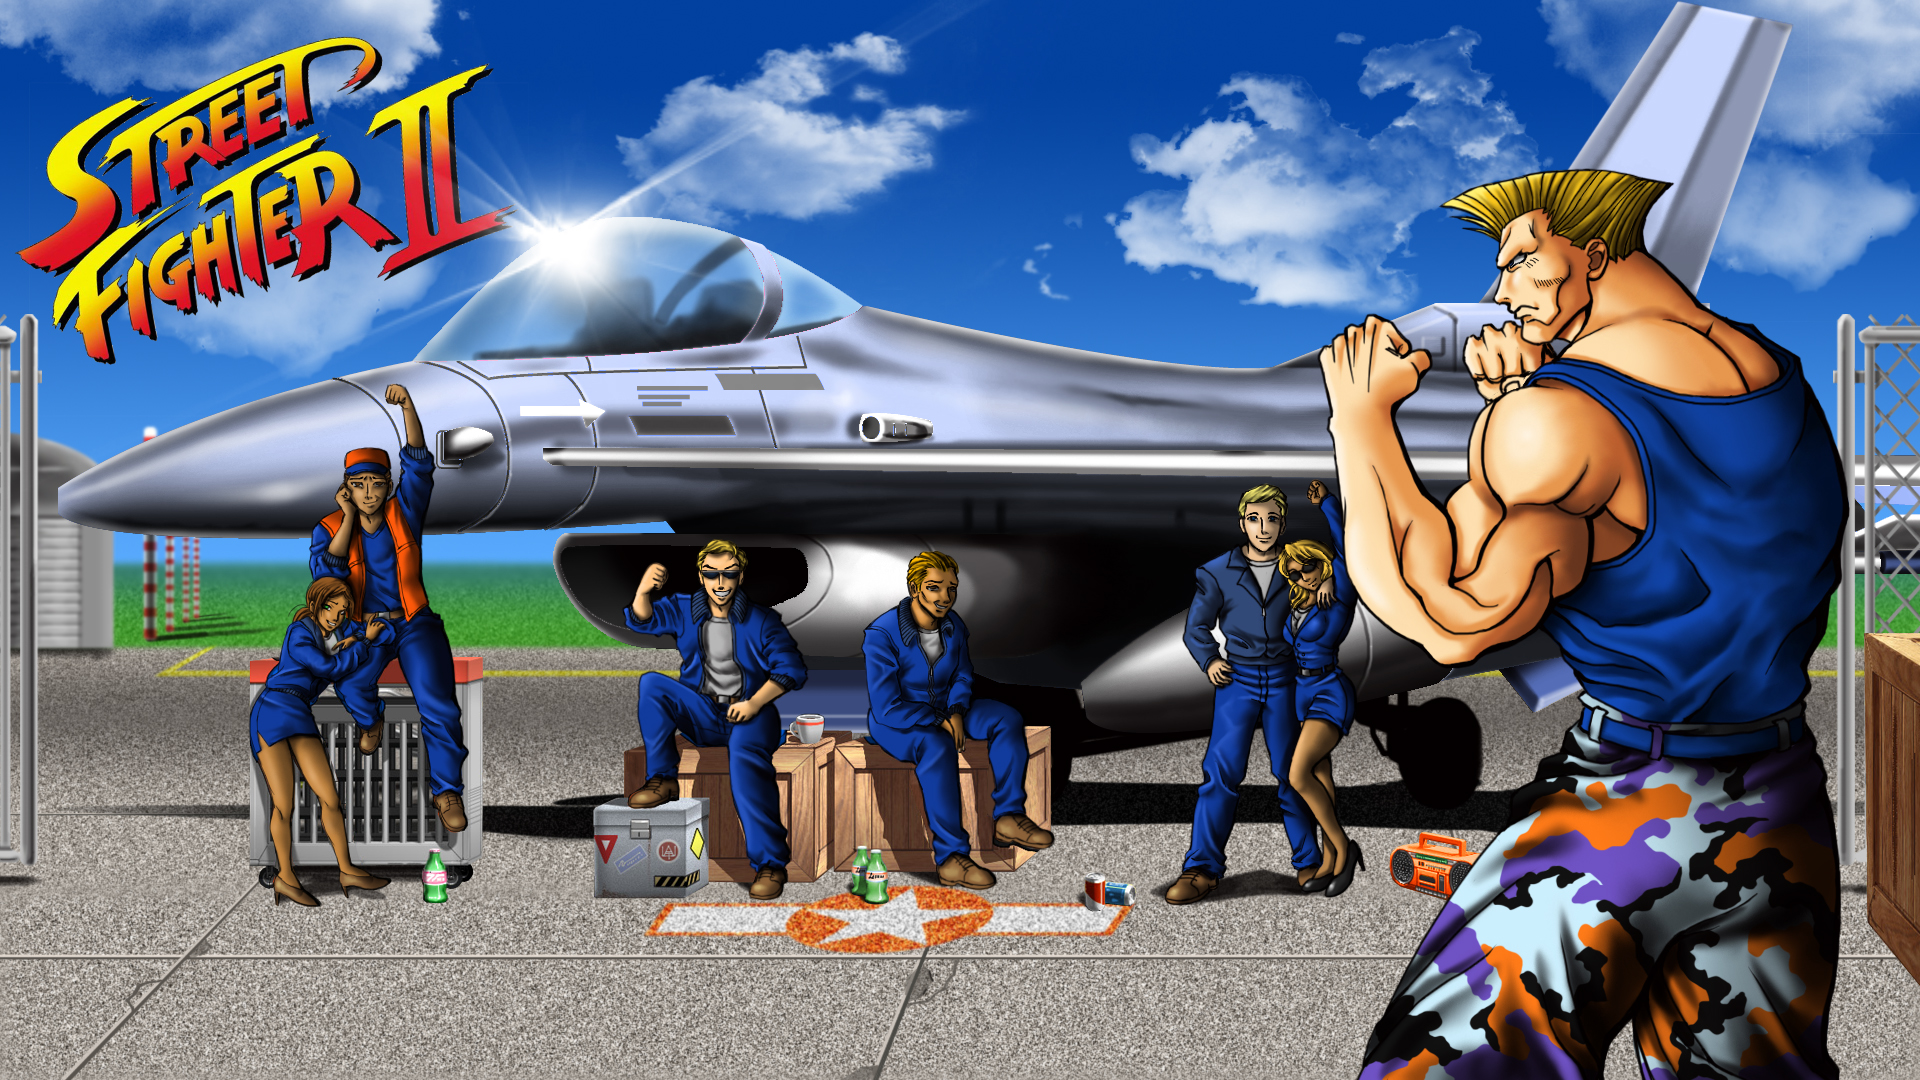 Guile Stage (Street Fighter II) by Norman-Fabian-86 on DeviantArt